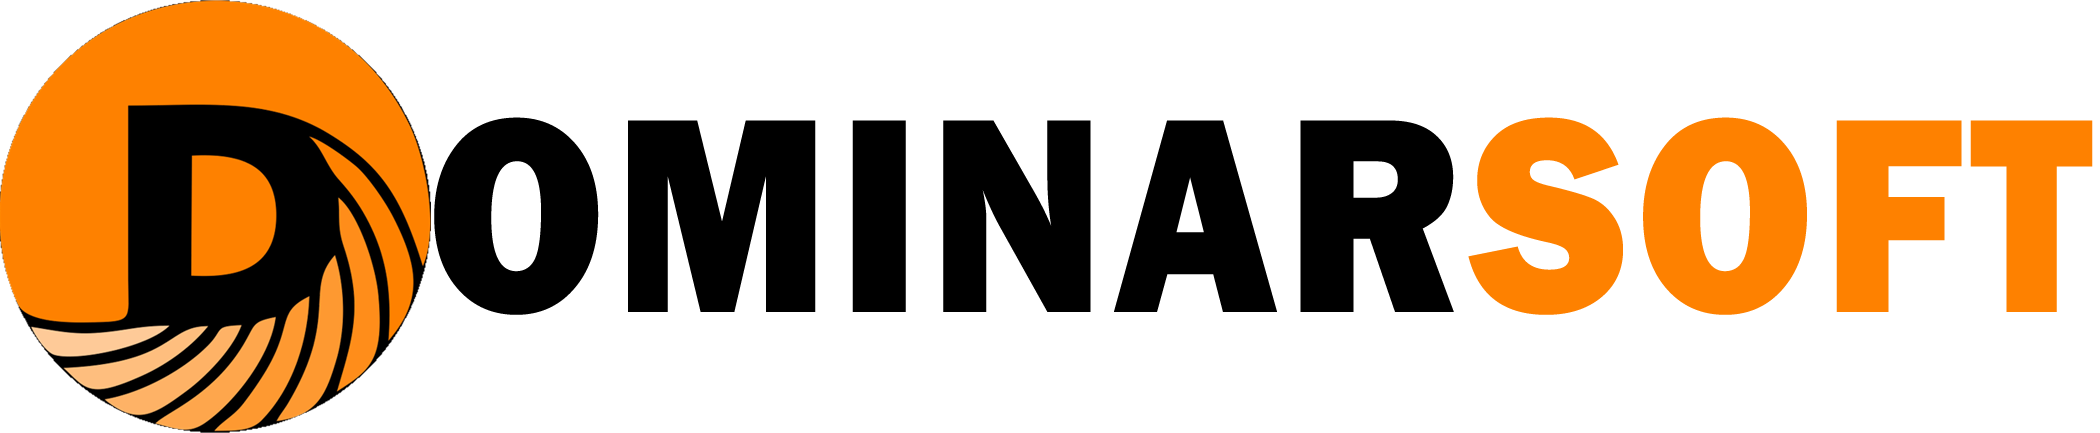 Dominarsoft Logo